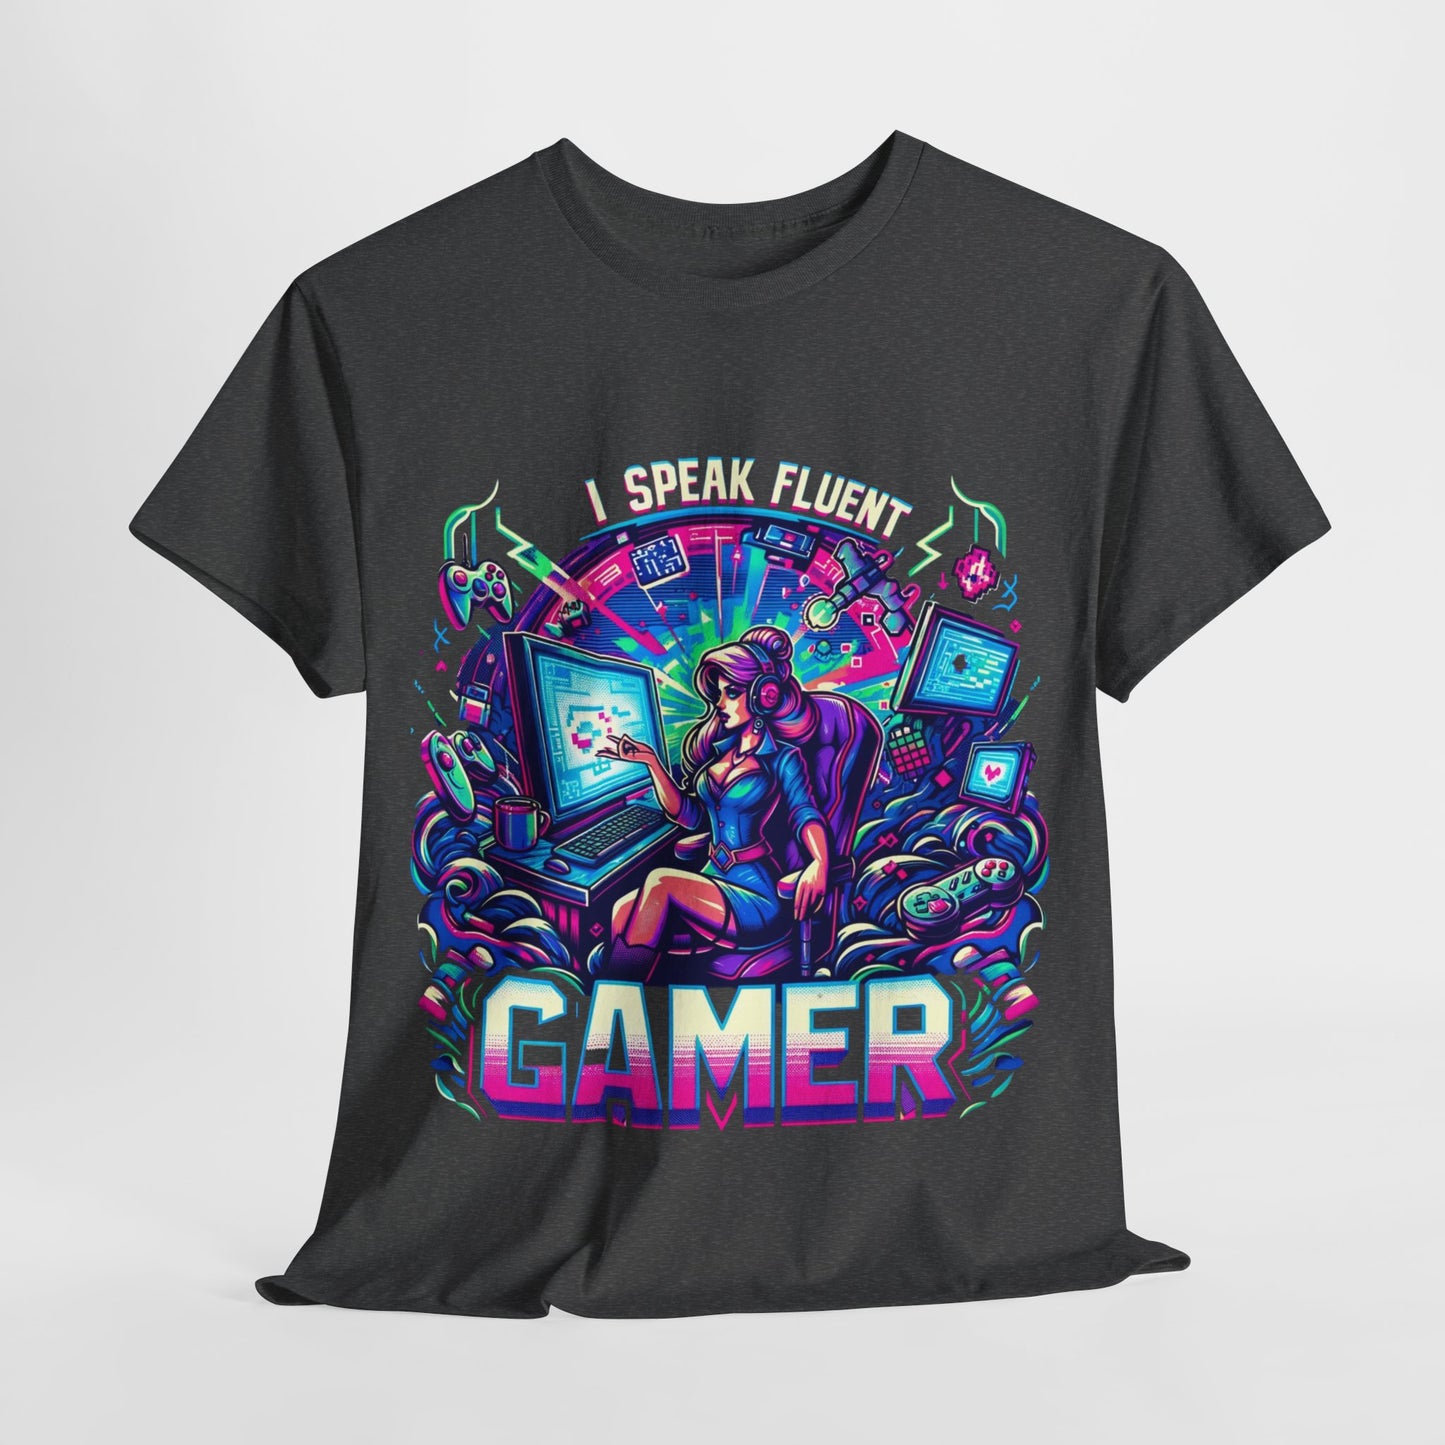 Y.M.L.Y. "I Speak Fluent Gamer" T-Shirt Gamer T-Shirt Game Streamer T-Shirt